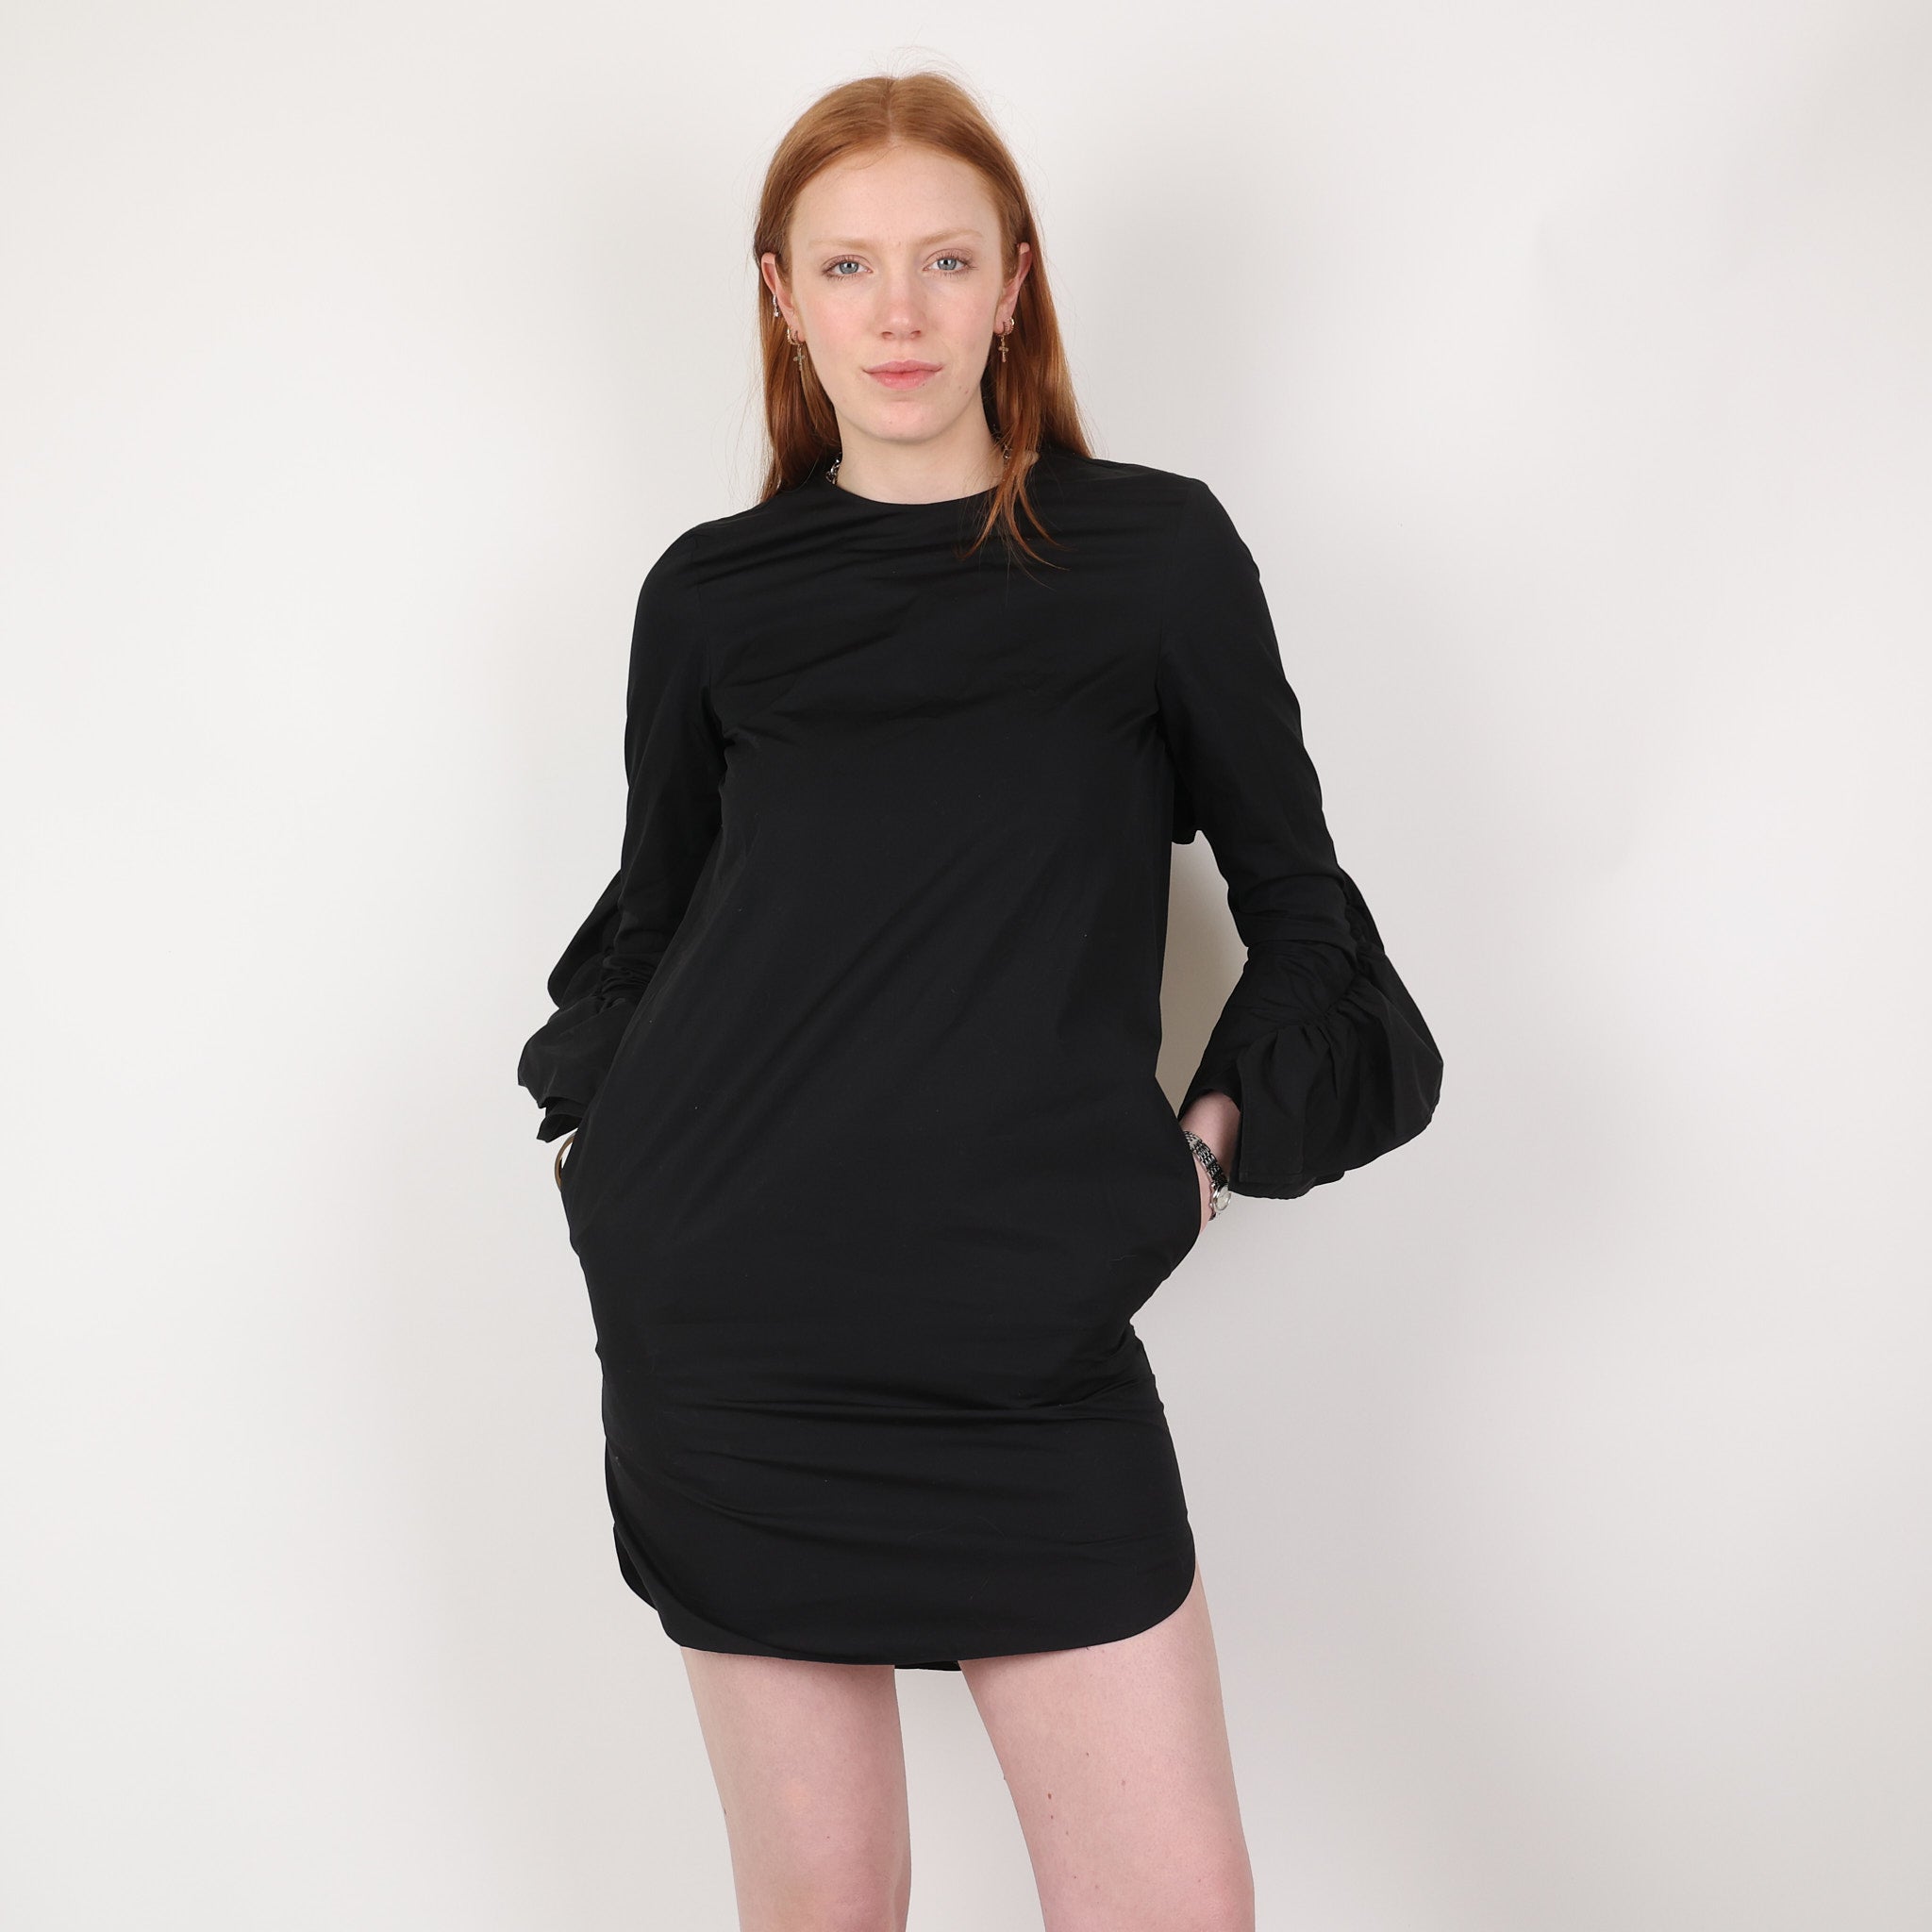 Dress, UK Size 6